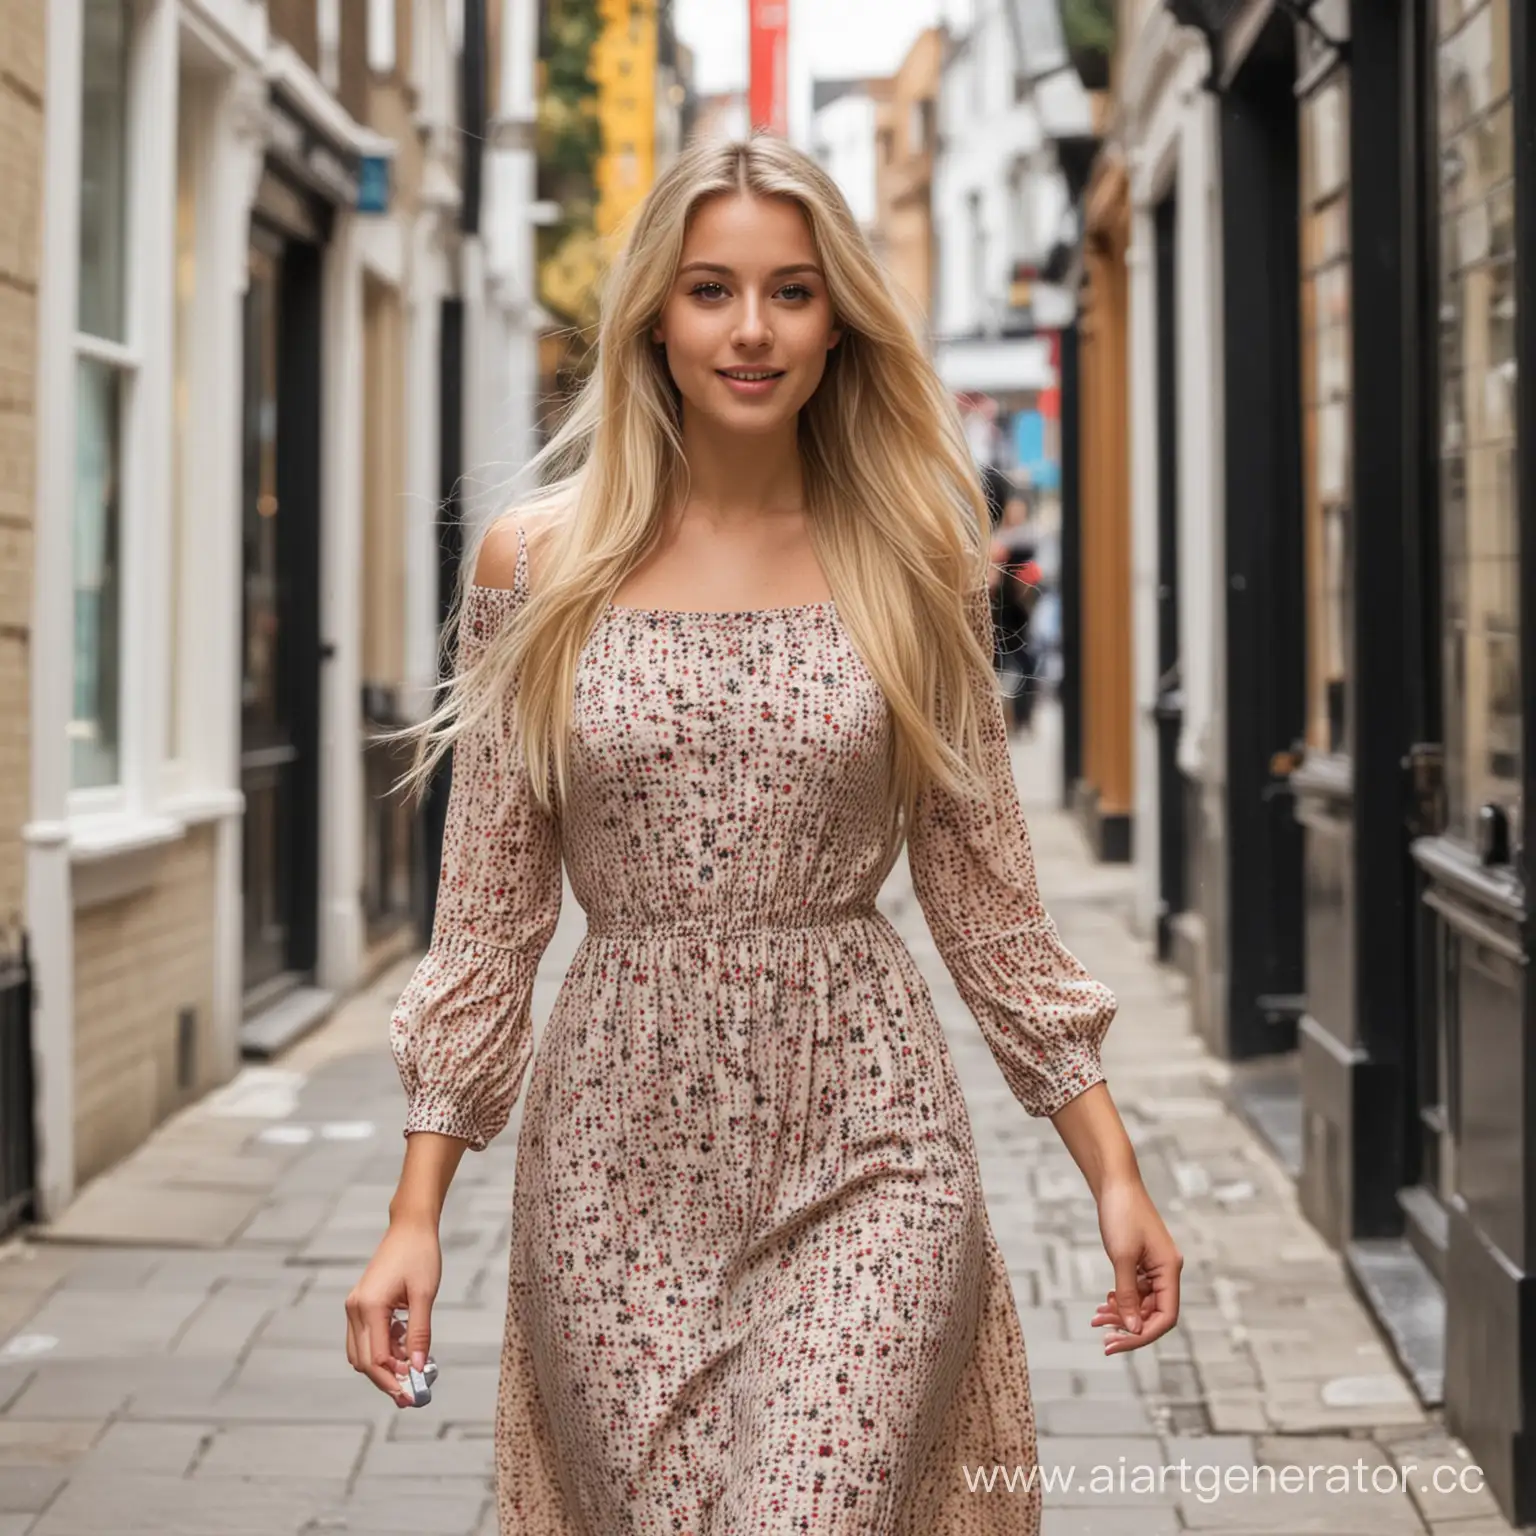 Beautiful young girl with blonde long hair in a beautiful dress walking down a London street with a beautiful girl with black hair, day shopping